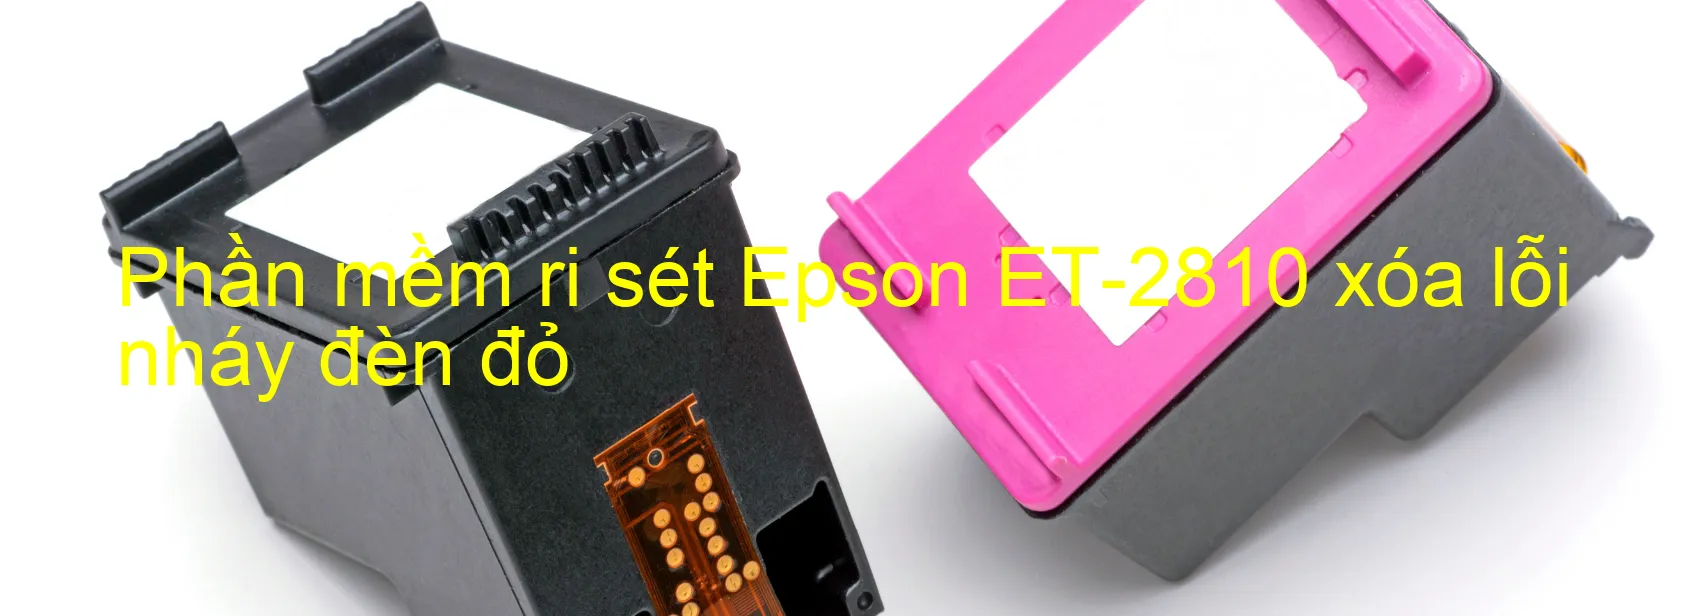 Phần mềm reset Epson ET-2810 xóa lỗi nháy đèn đỏ